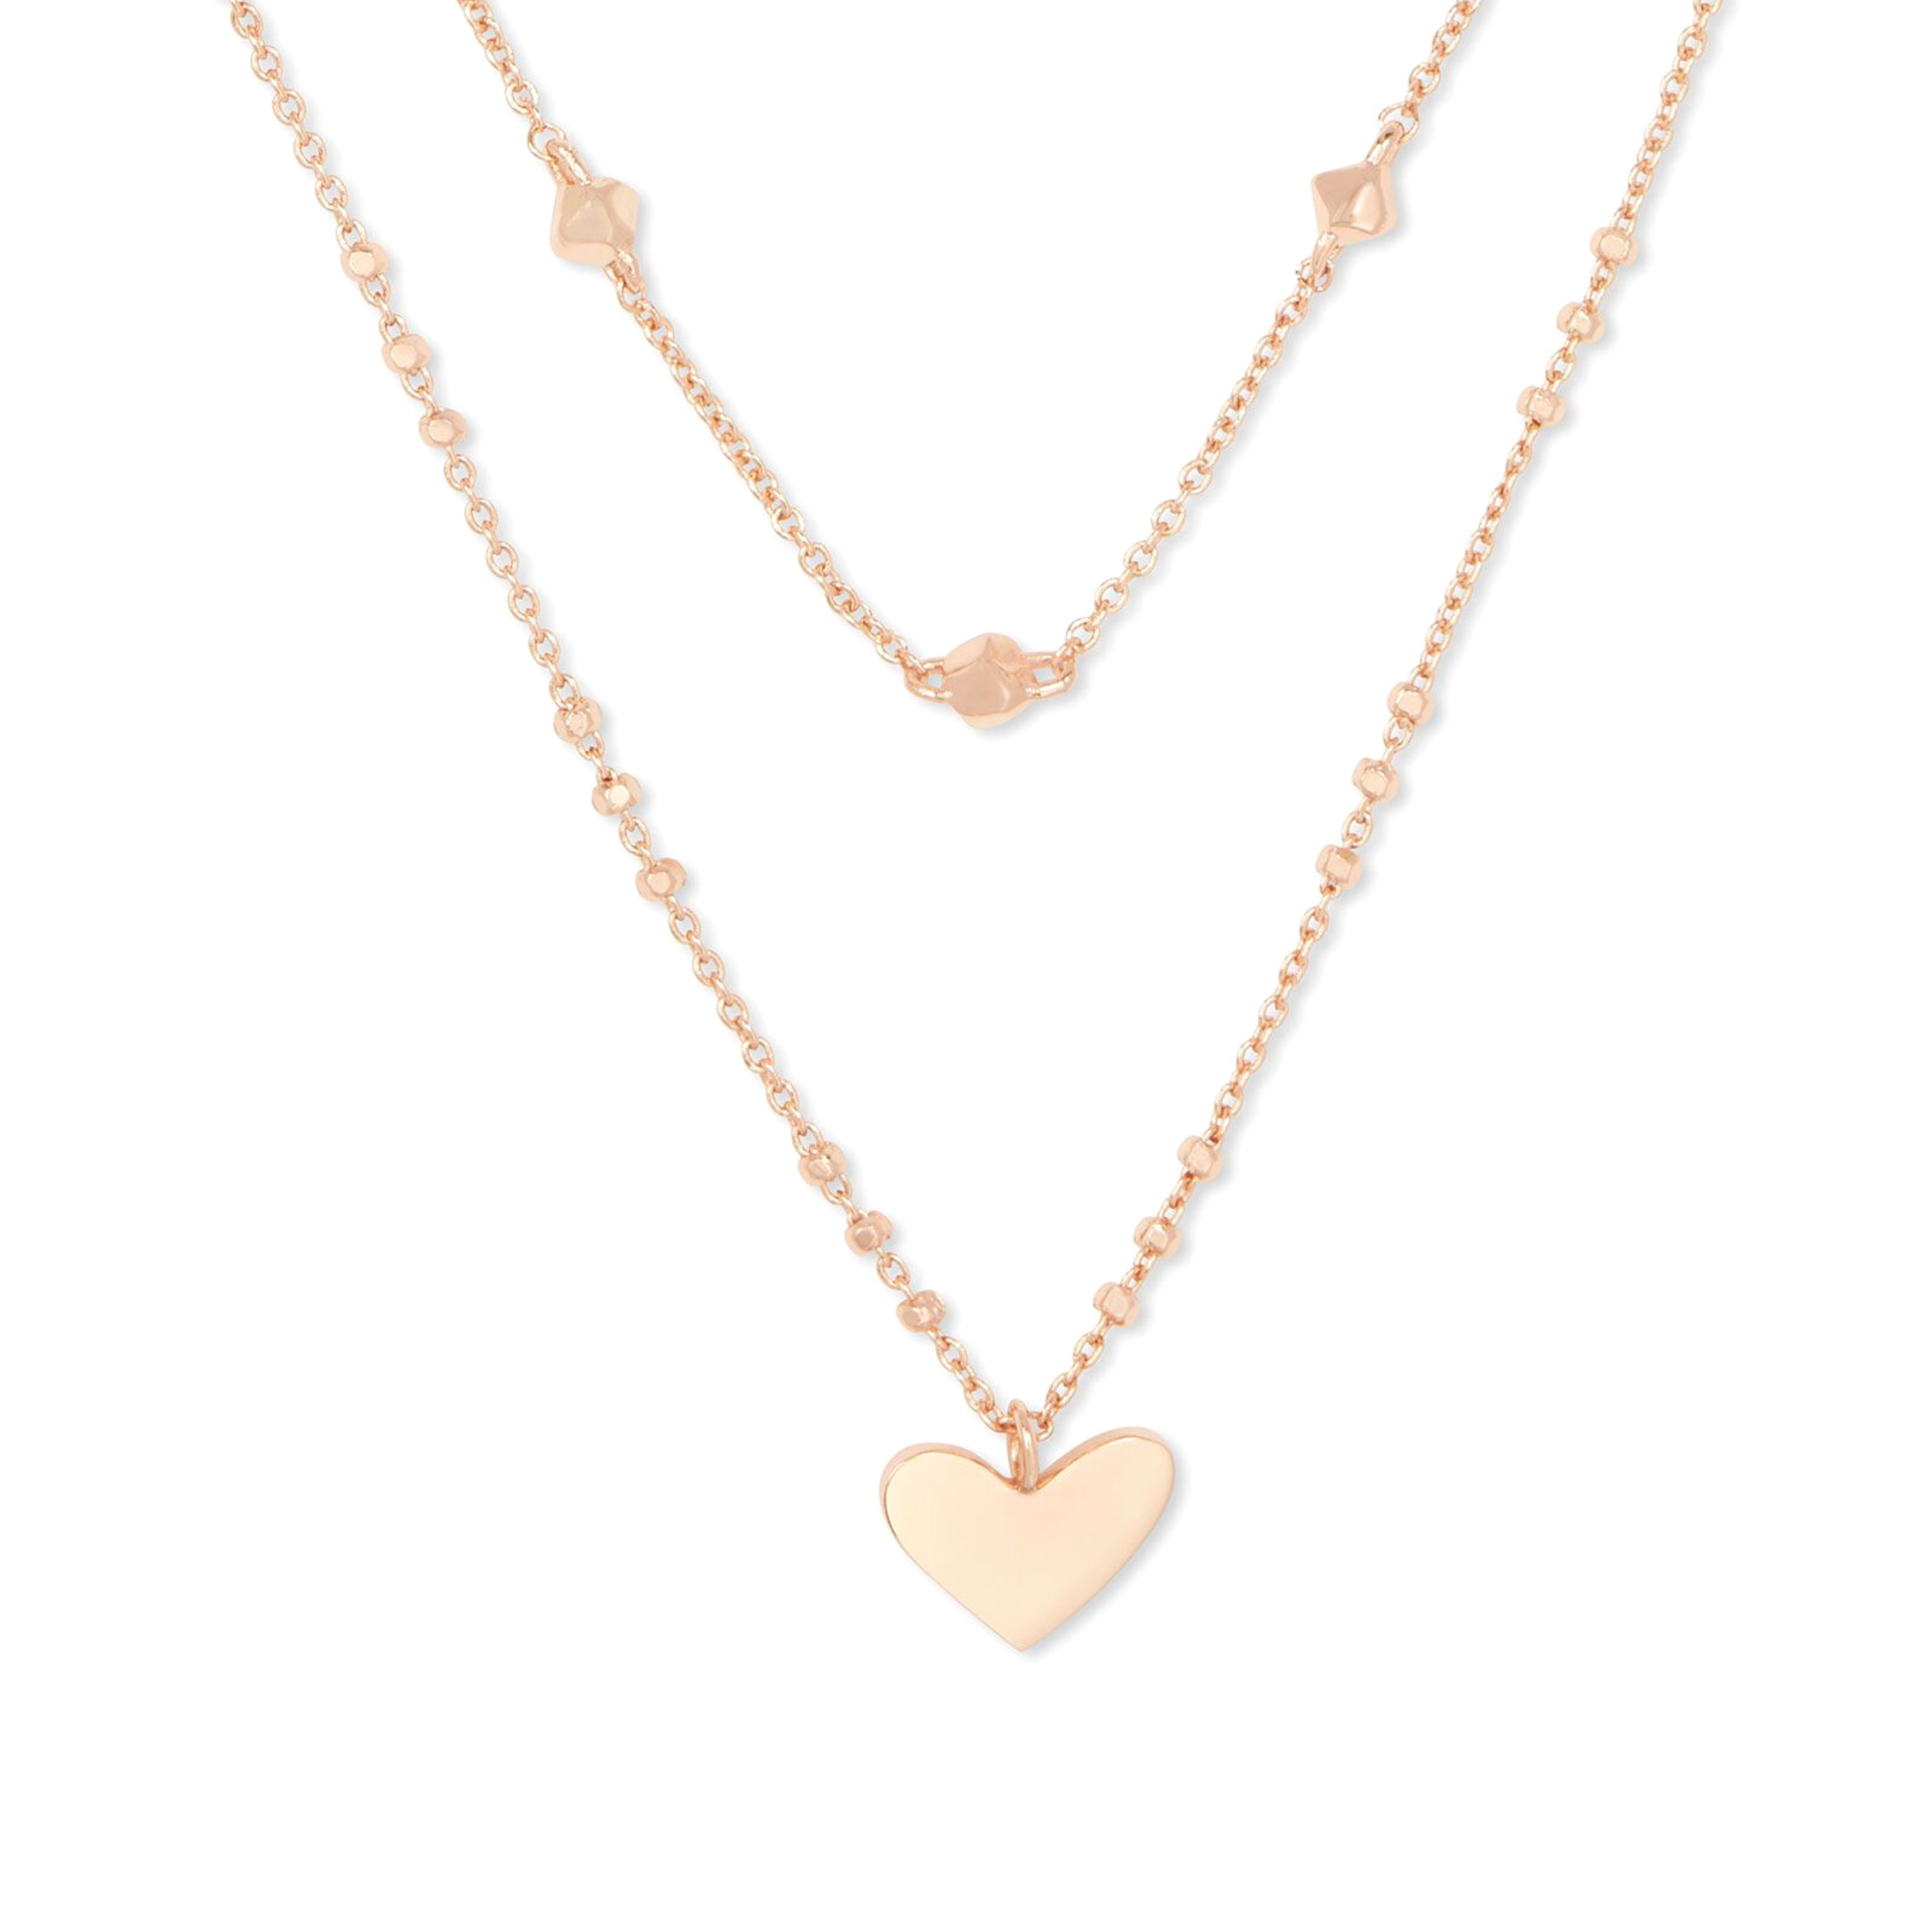 Kendra Scott | Ari Heart Multi Strand Necklace in Rose Gold